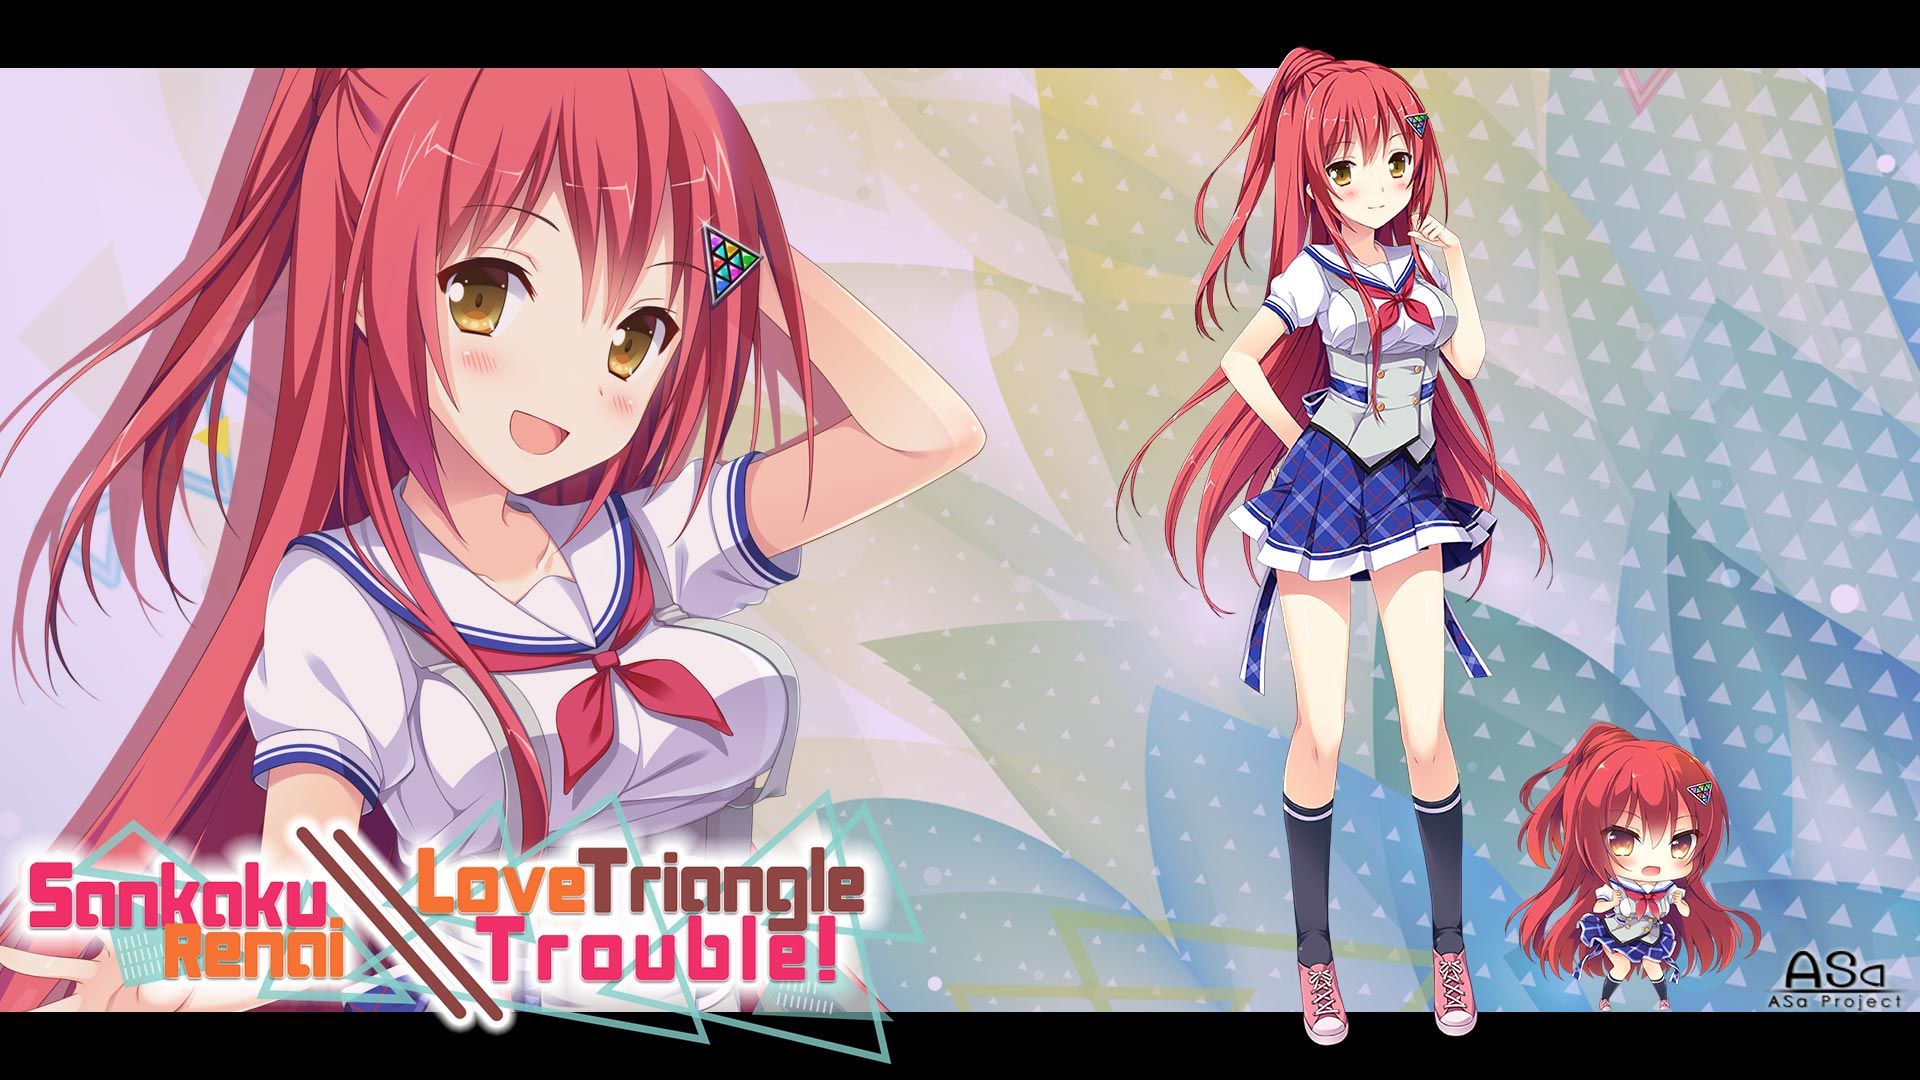 Sankaku renai love triangle trouble